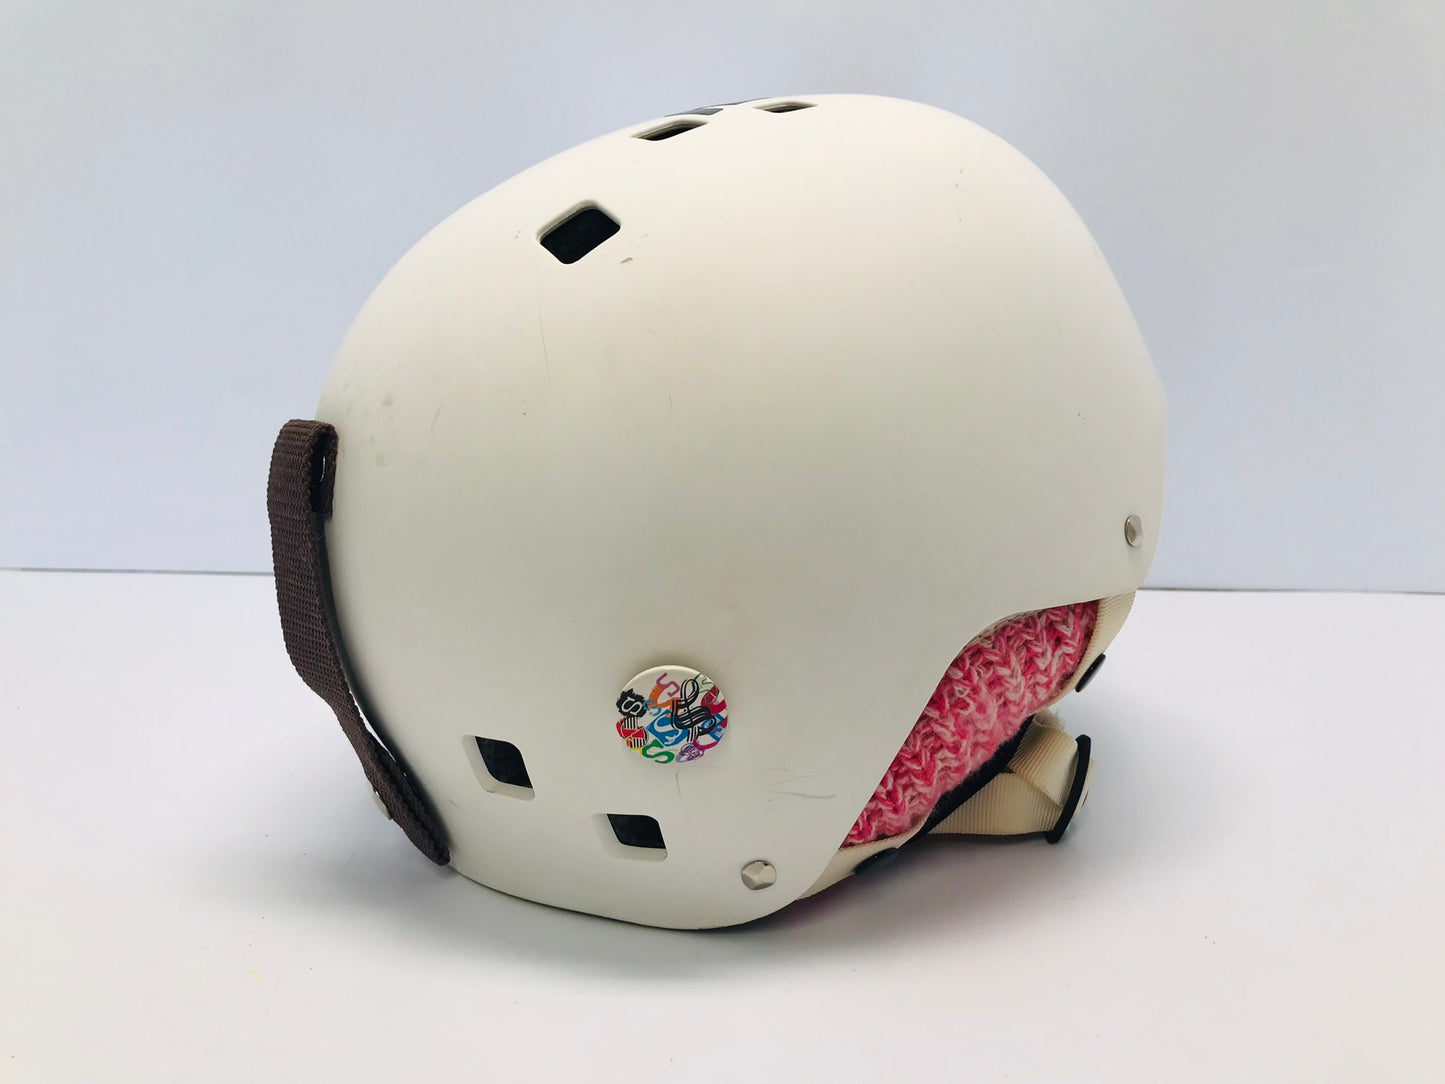 Ski Helmet Child Size 7-9 Salomon  White Pink  With Twist Size Adjustor on Back Outstanding Quality